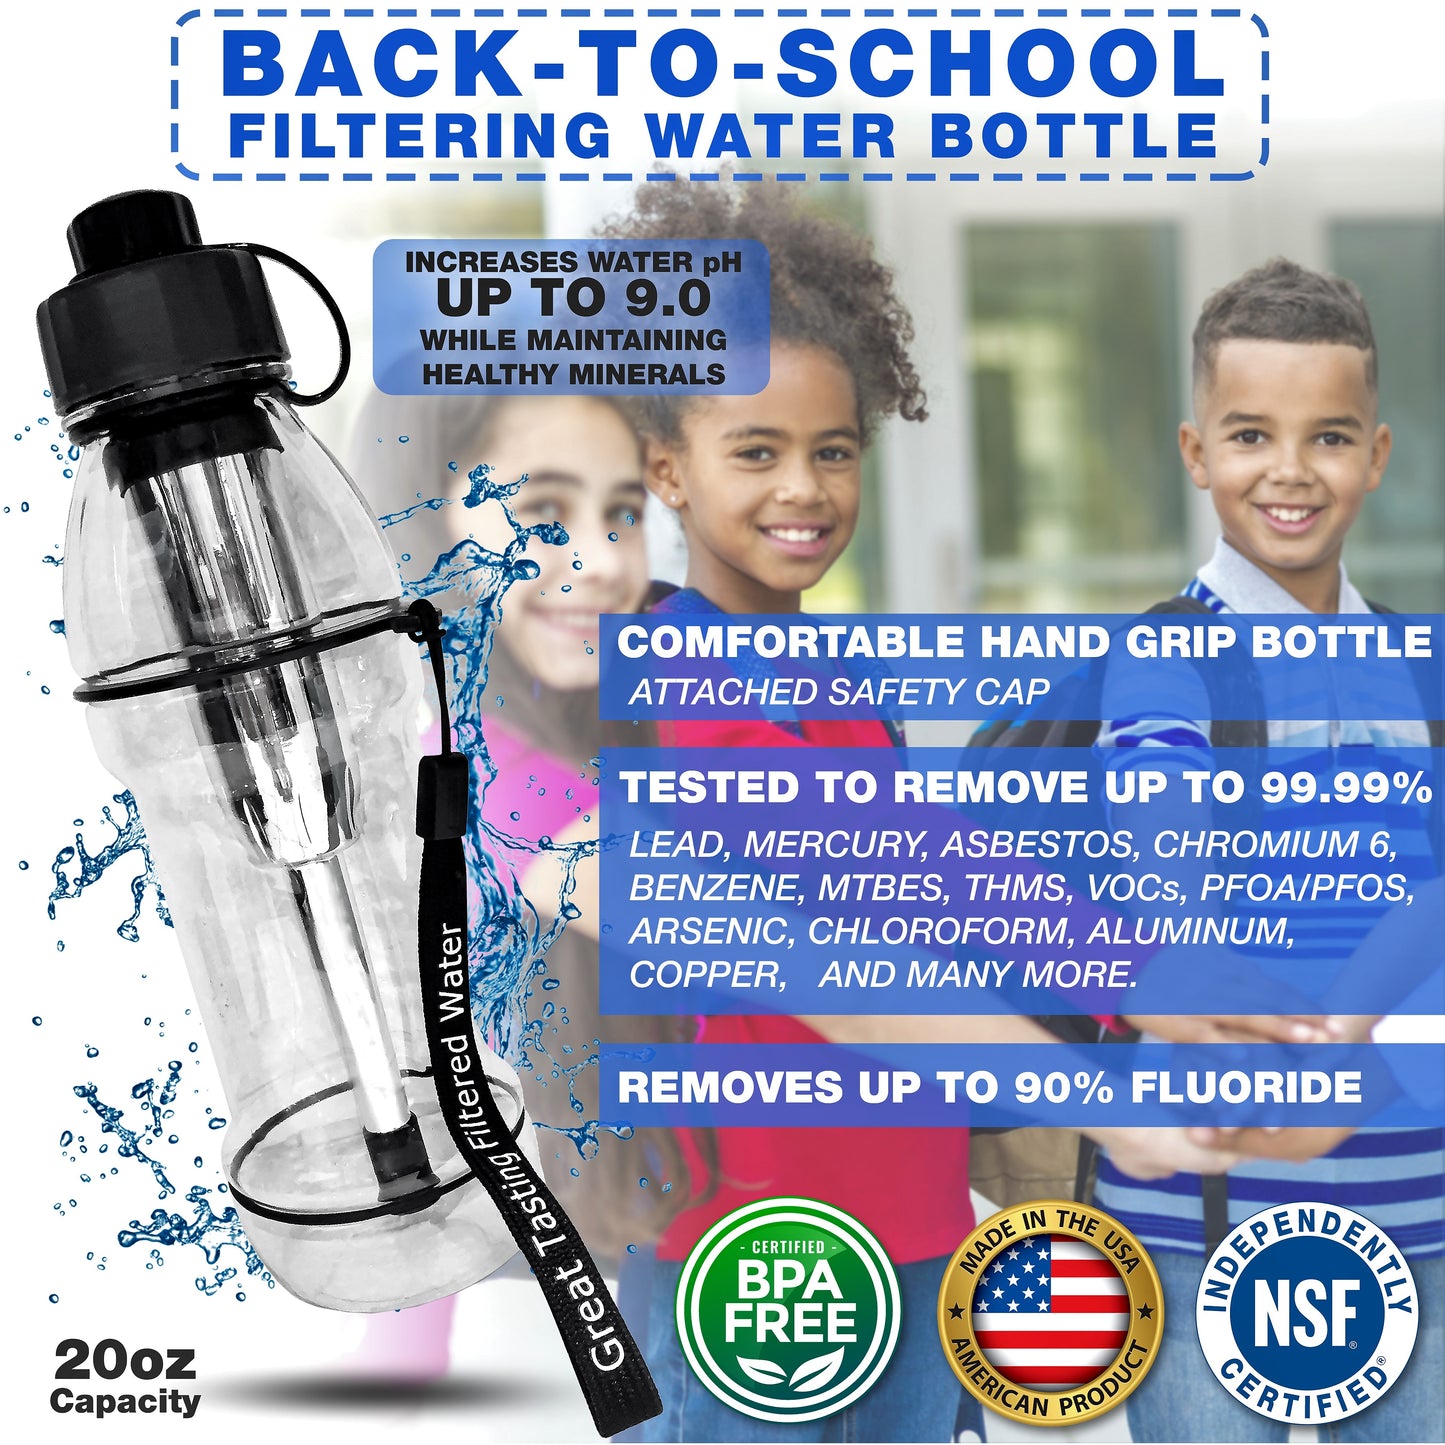 Back To School - Filtering Water Bottle